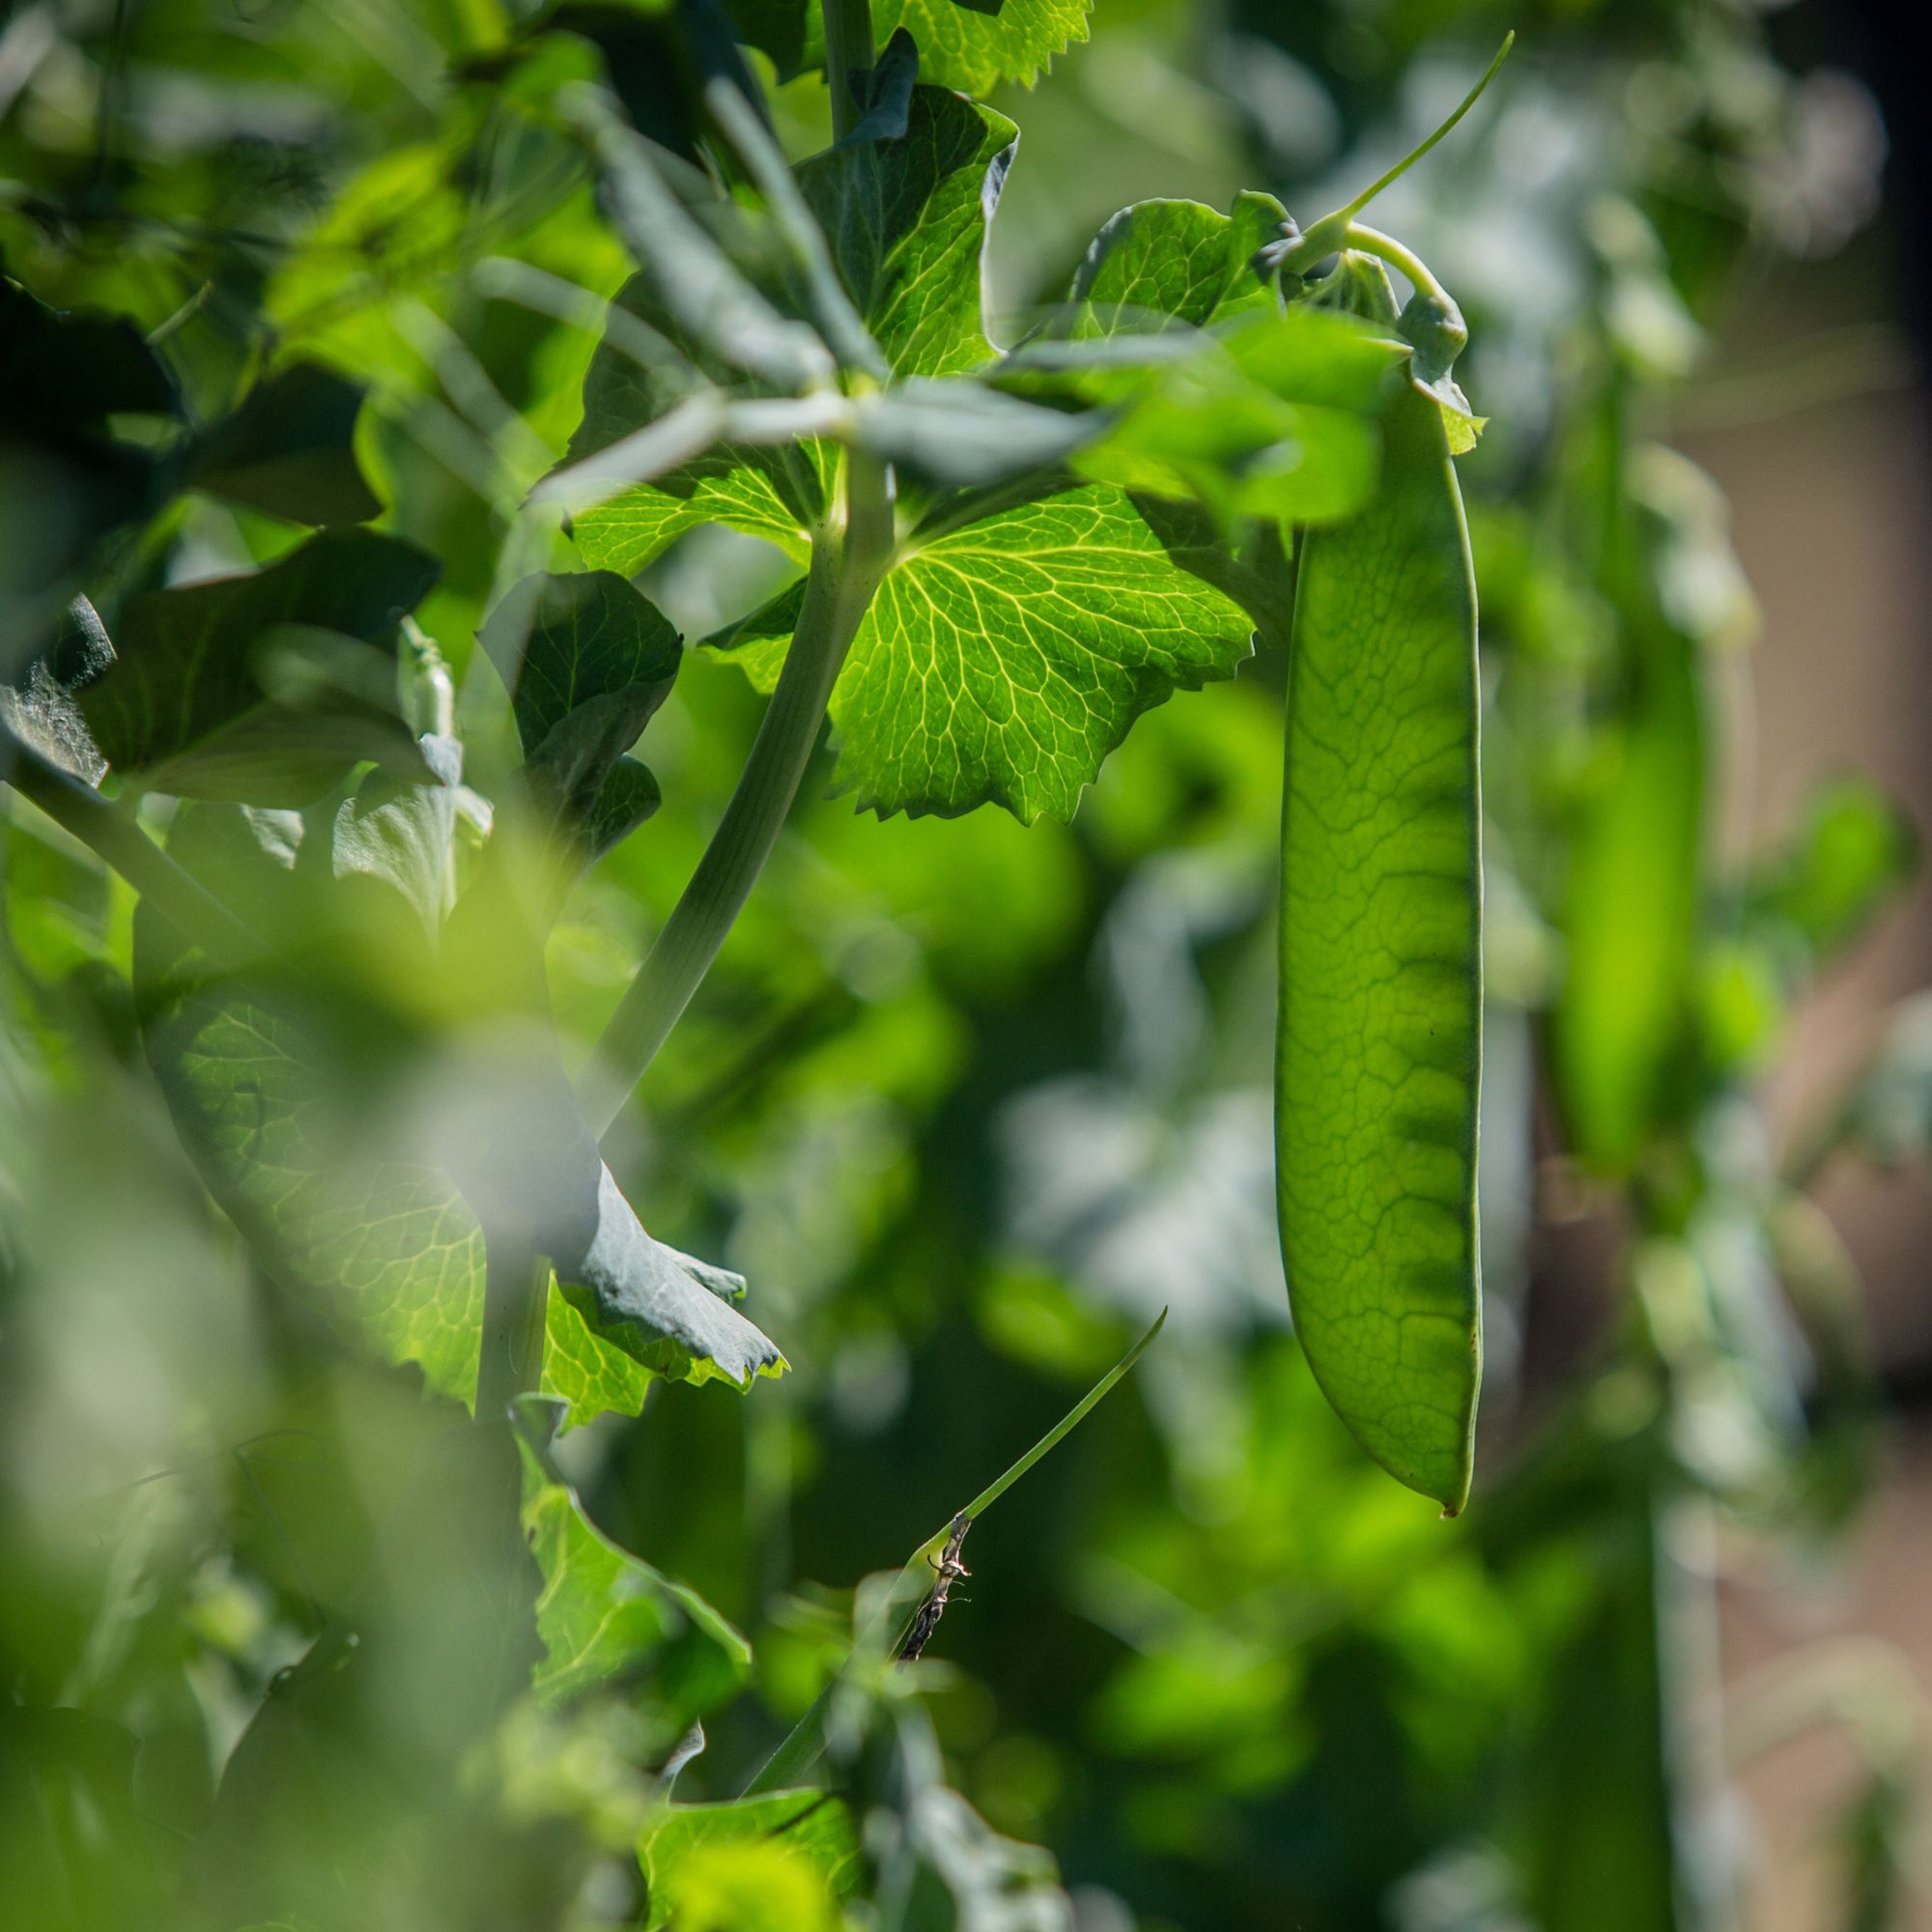 Peas growing in a vegetable garden